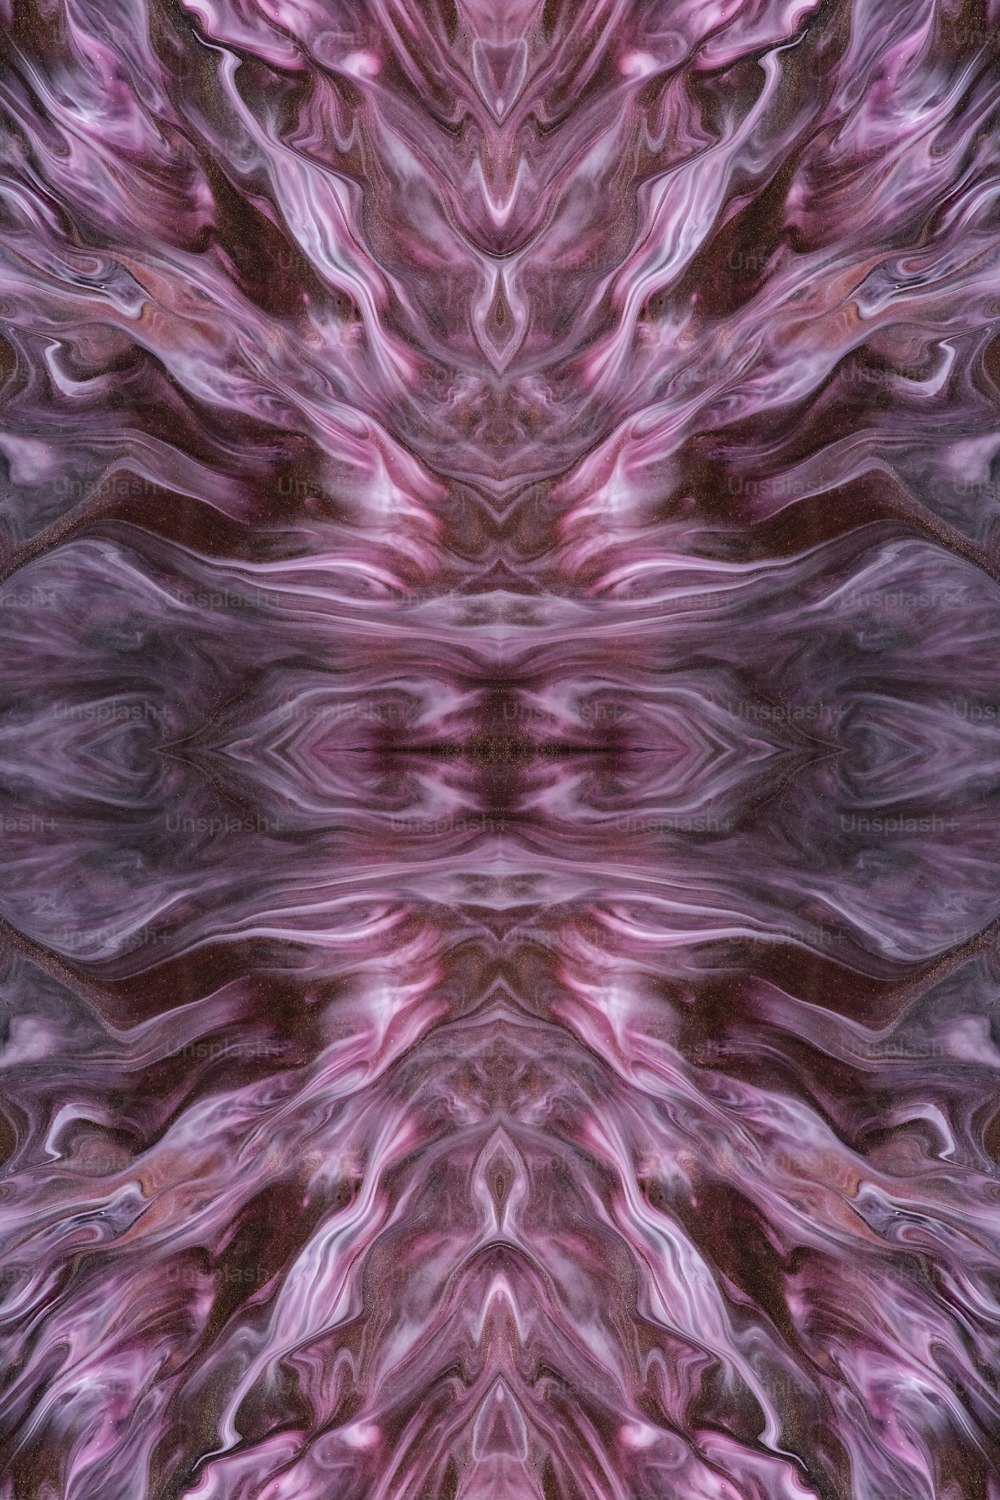 Una imagen abstracta de una flor rosa y púrpura